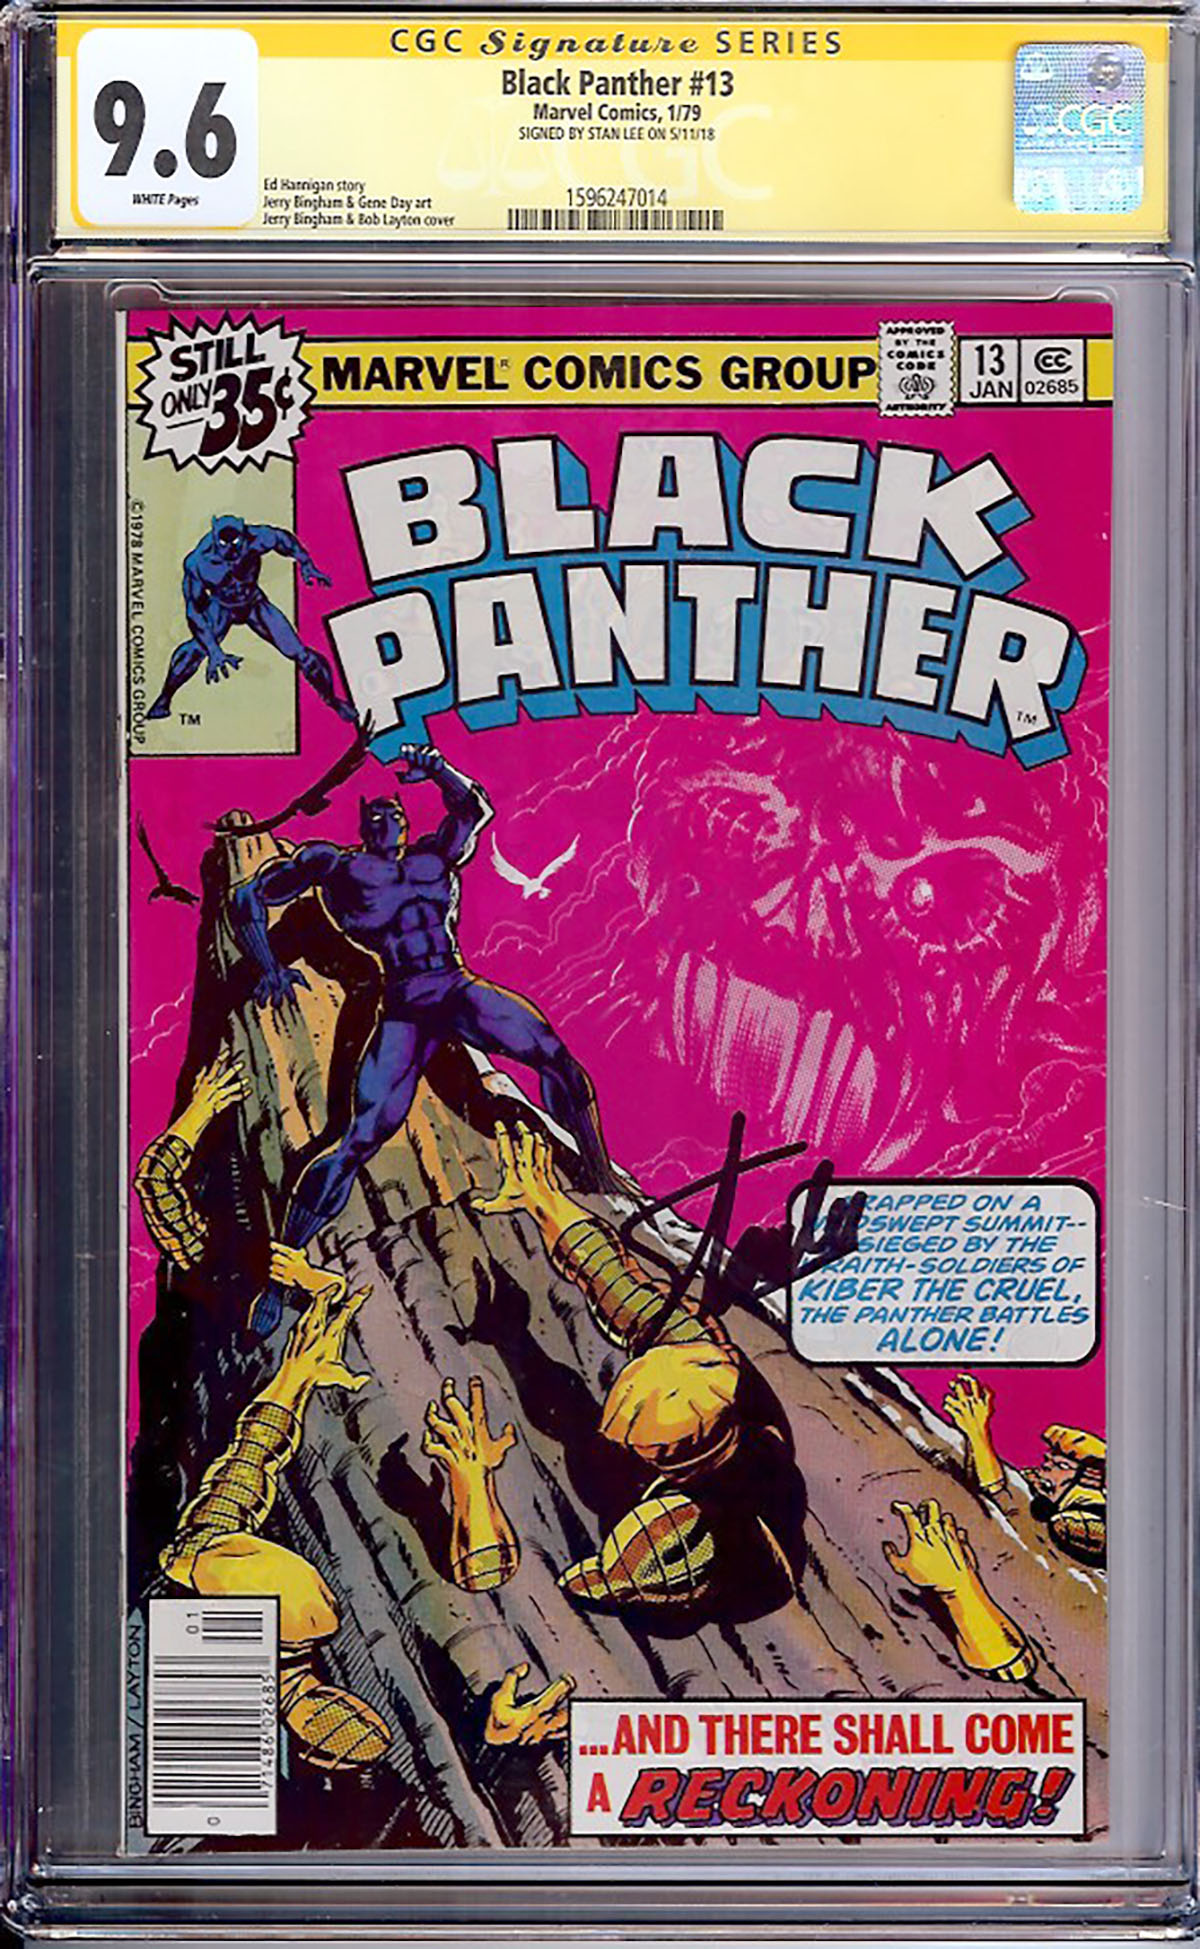 Black Panther #13 CGC 9.6 w CGC Signature SERIES